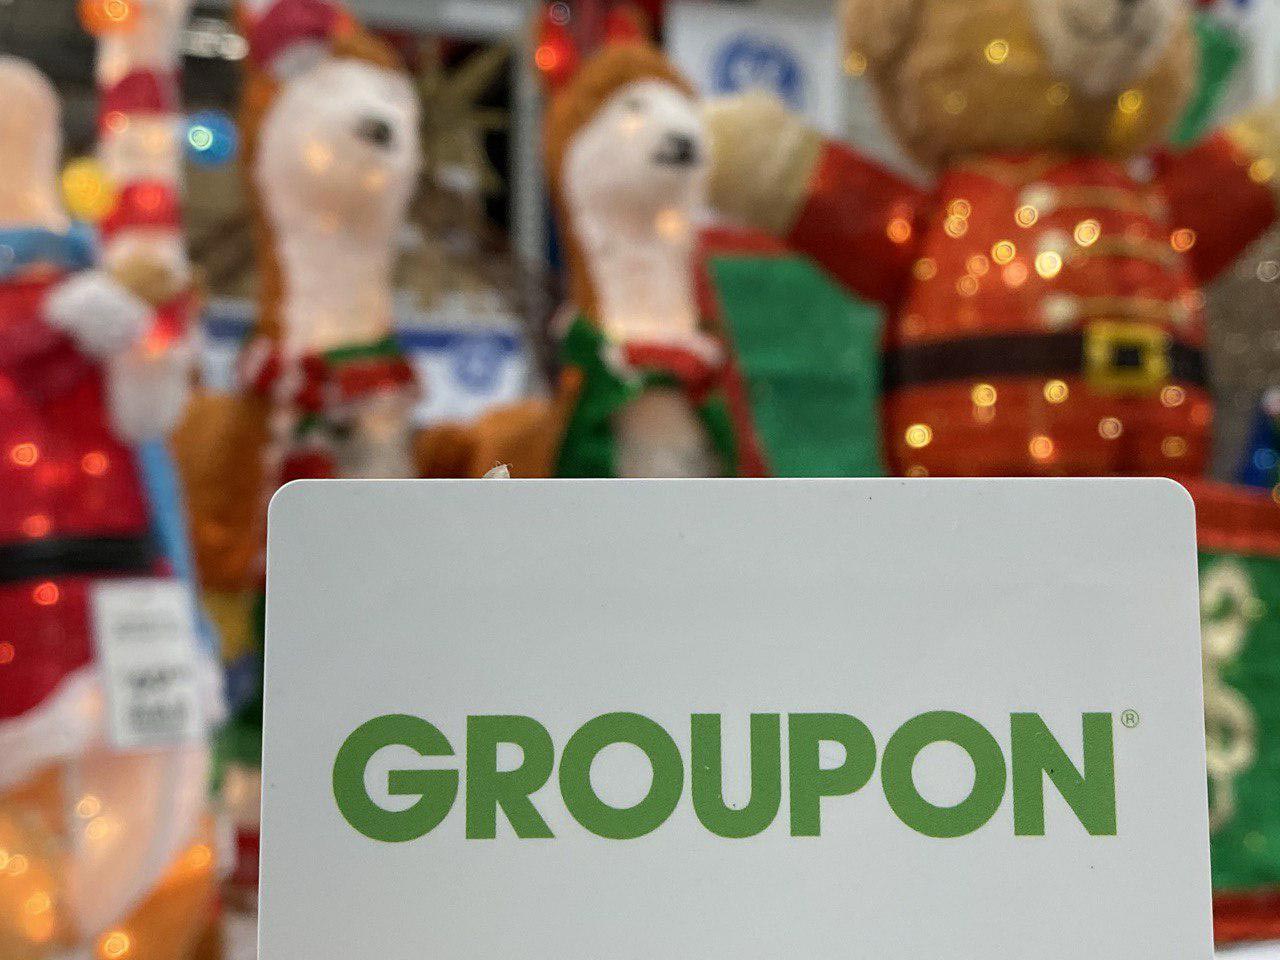 Groupon Holiday Deals